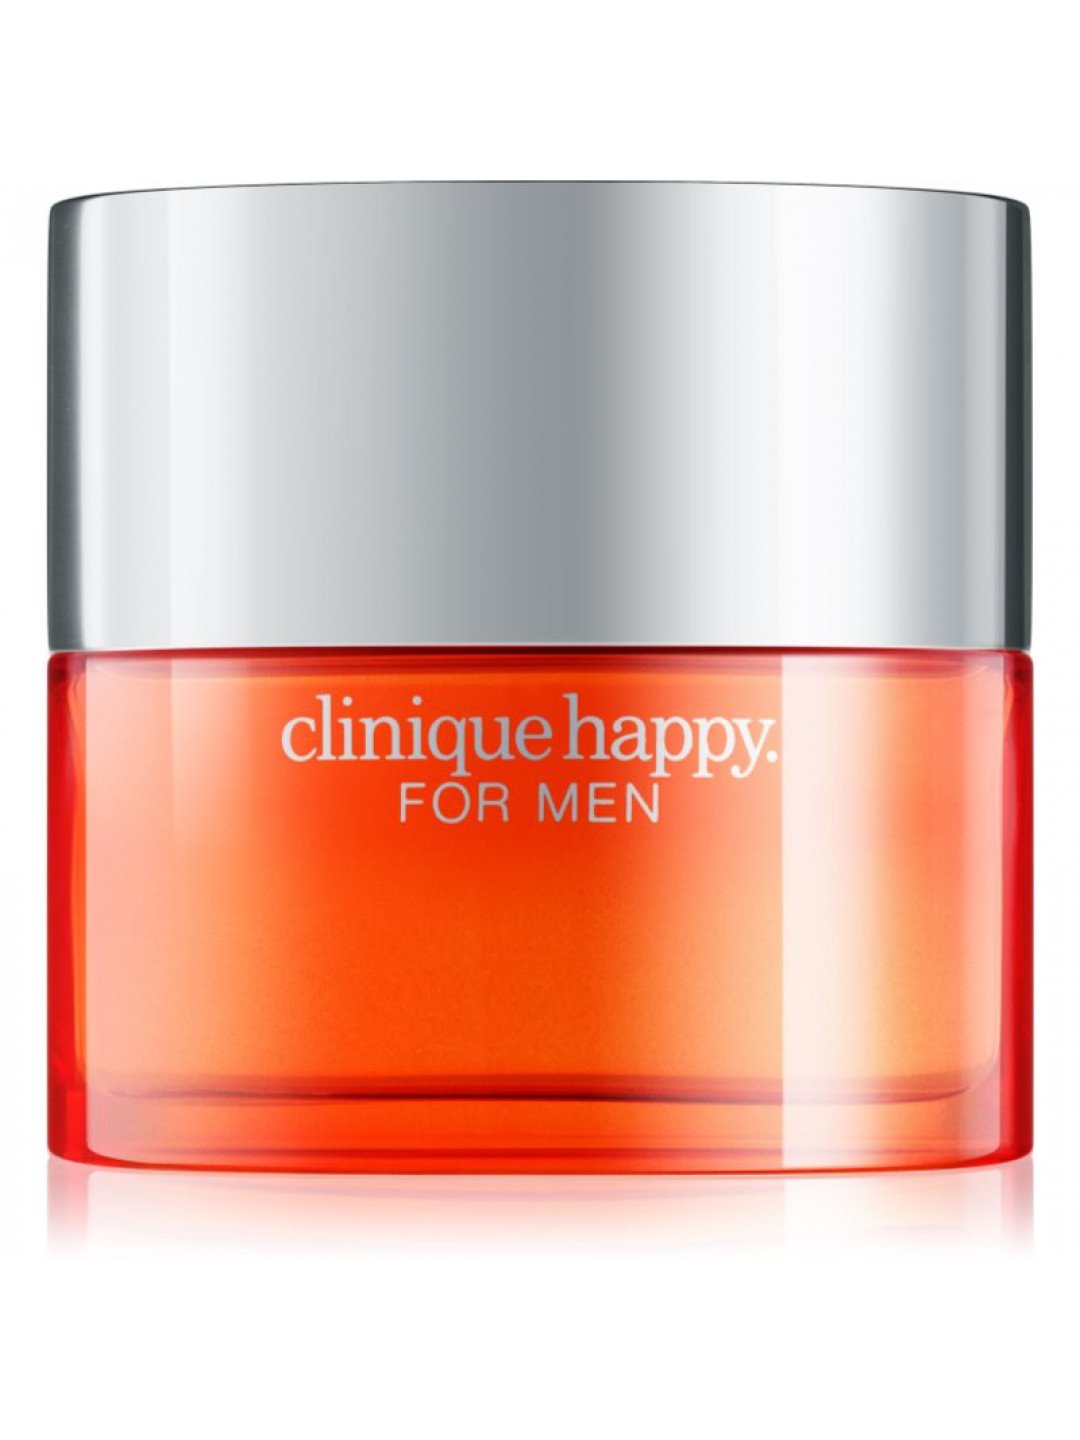 Clinique Happy for Men toaletní voda pro muže 50 ml